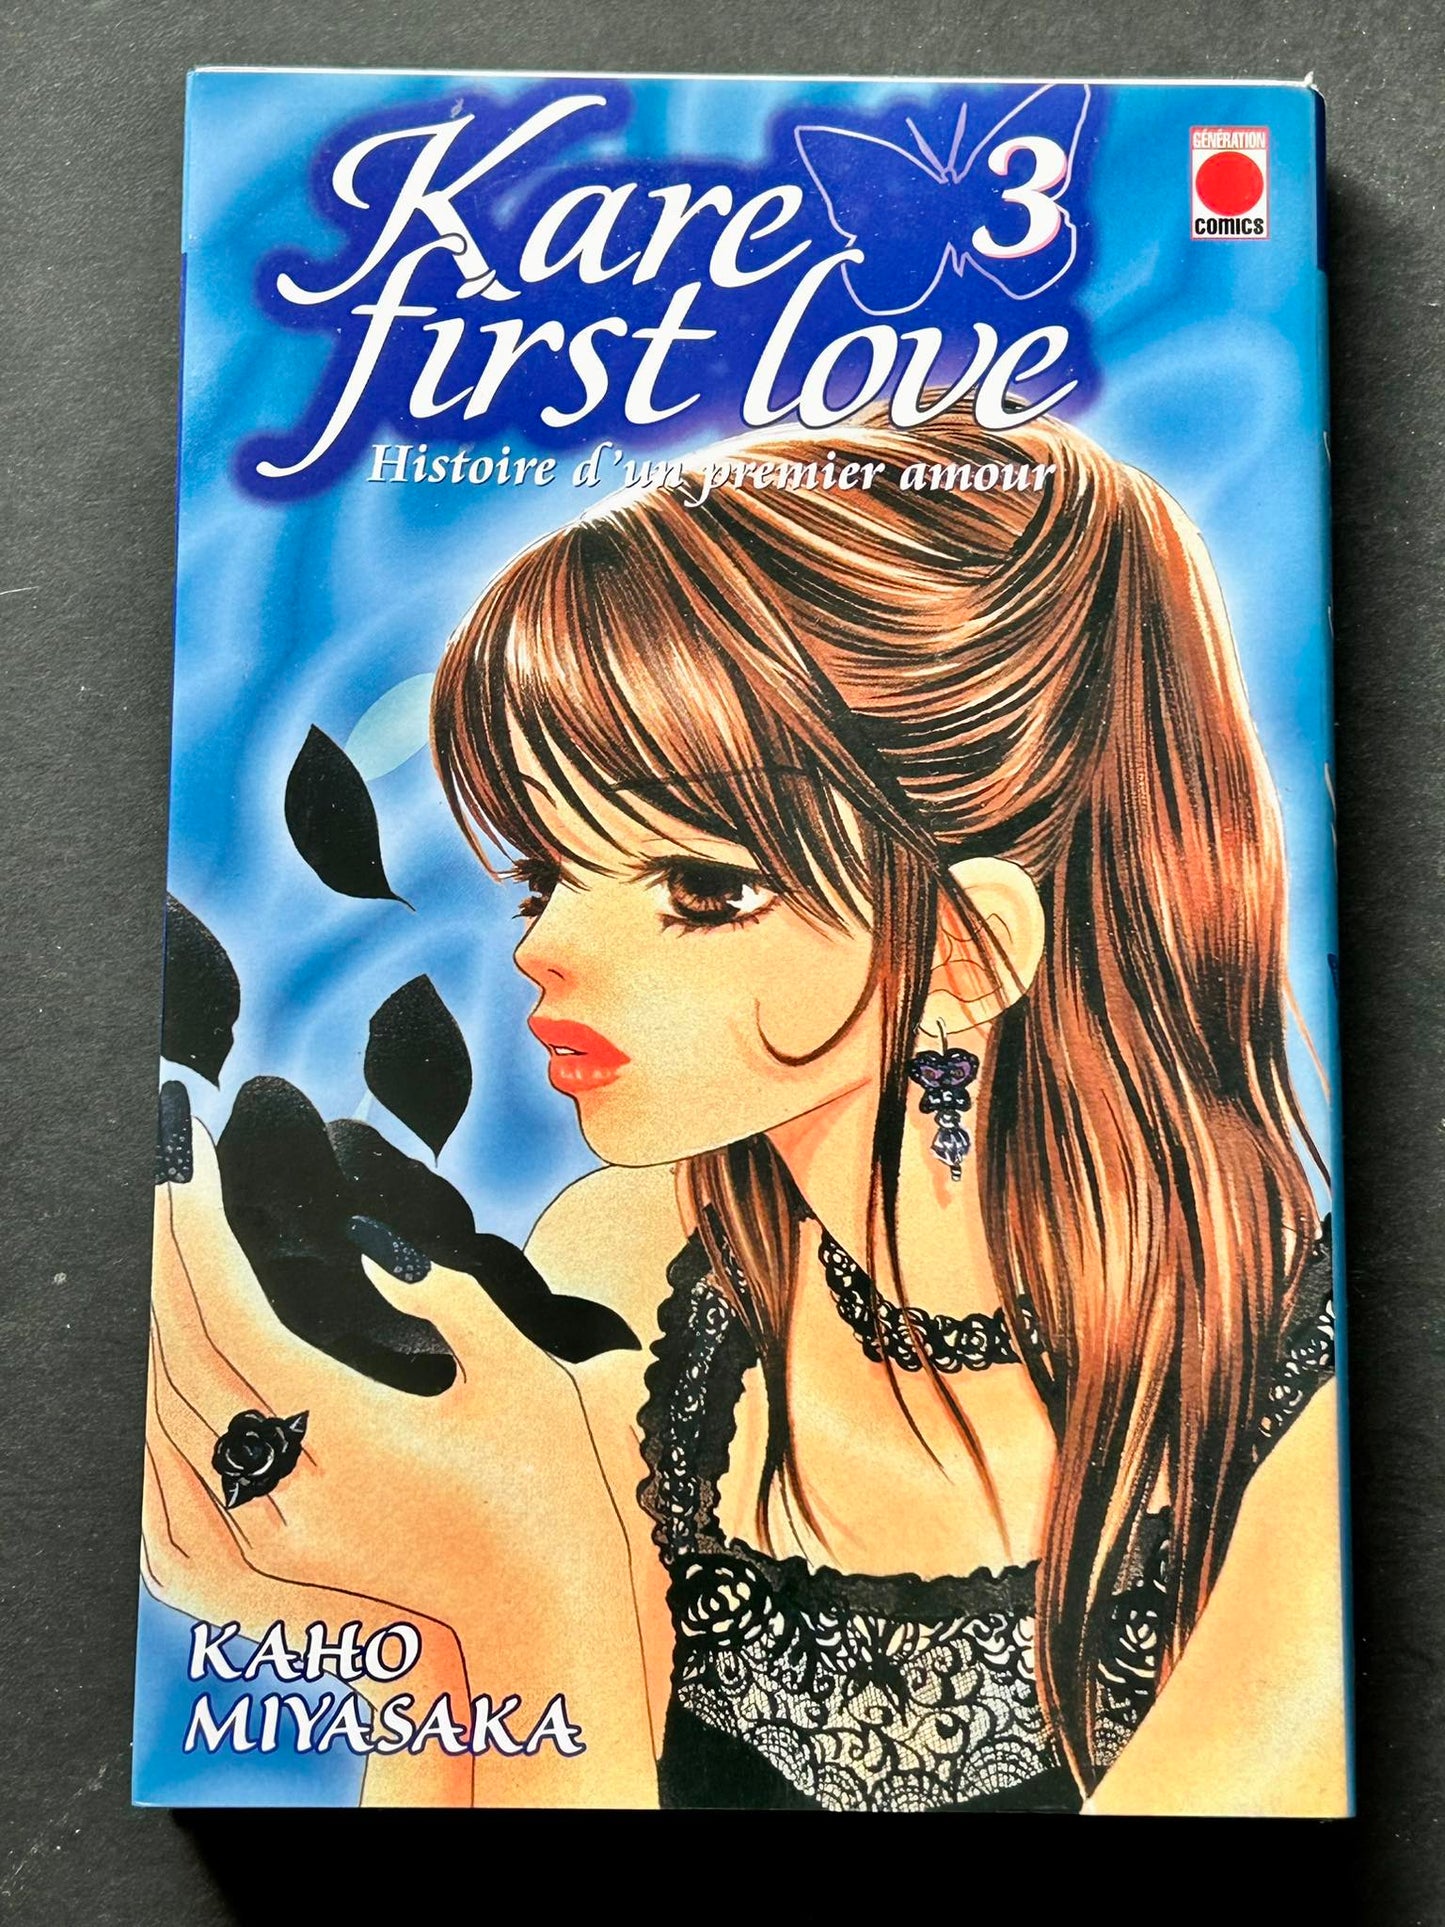 Kare First Love, volume 3